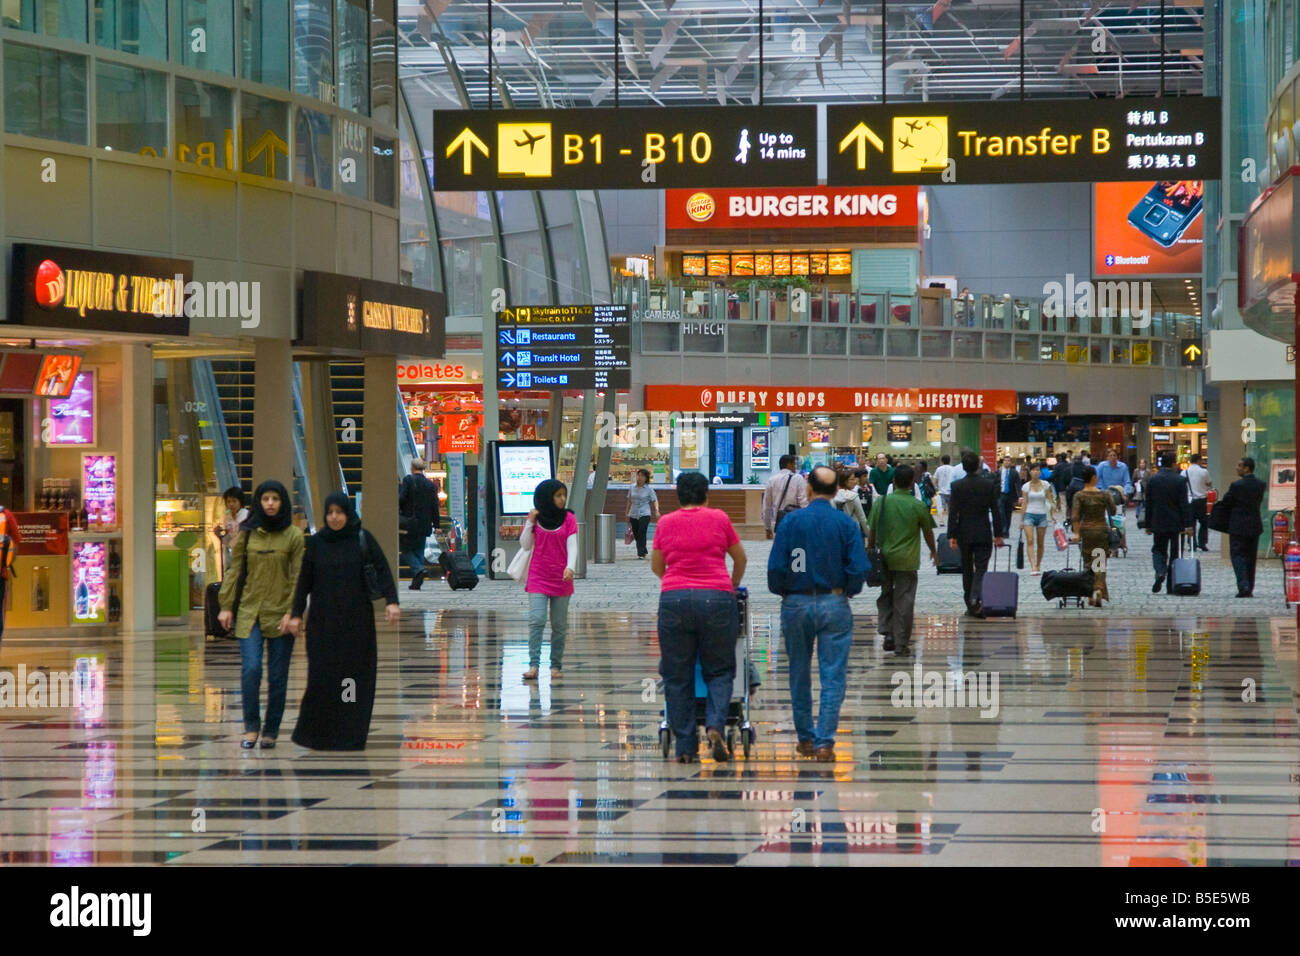 Singapore Changi Airport Terminal 3, World's #1 airport (Sk…